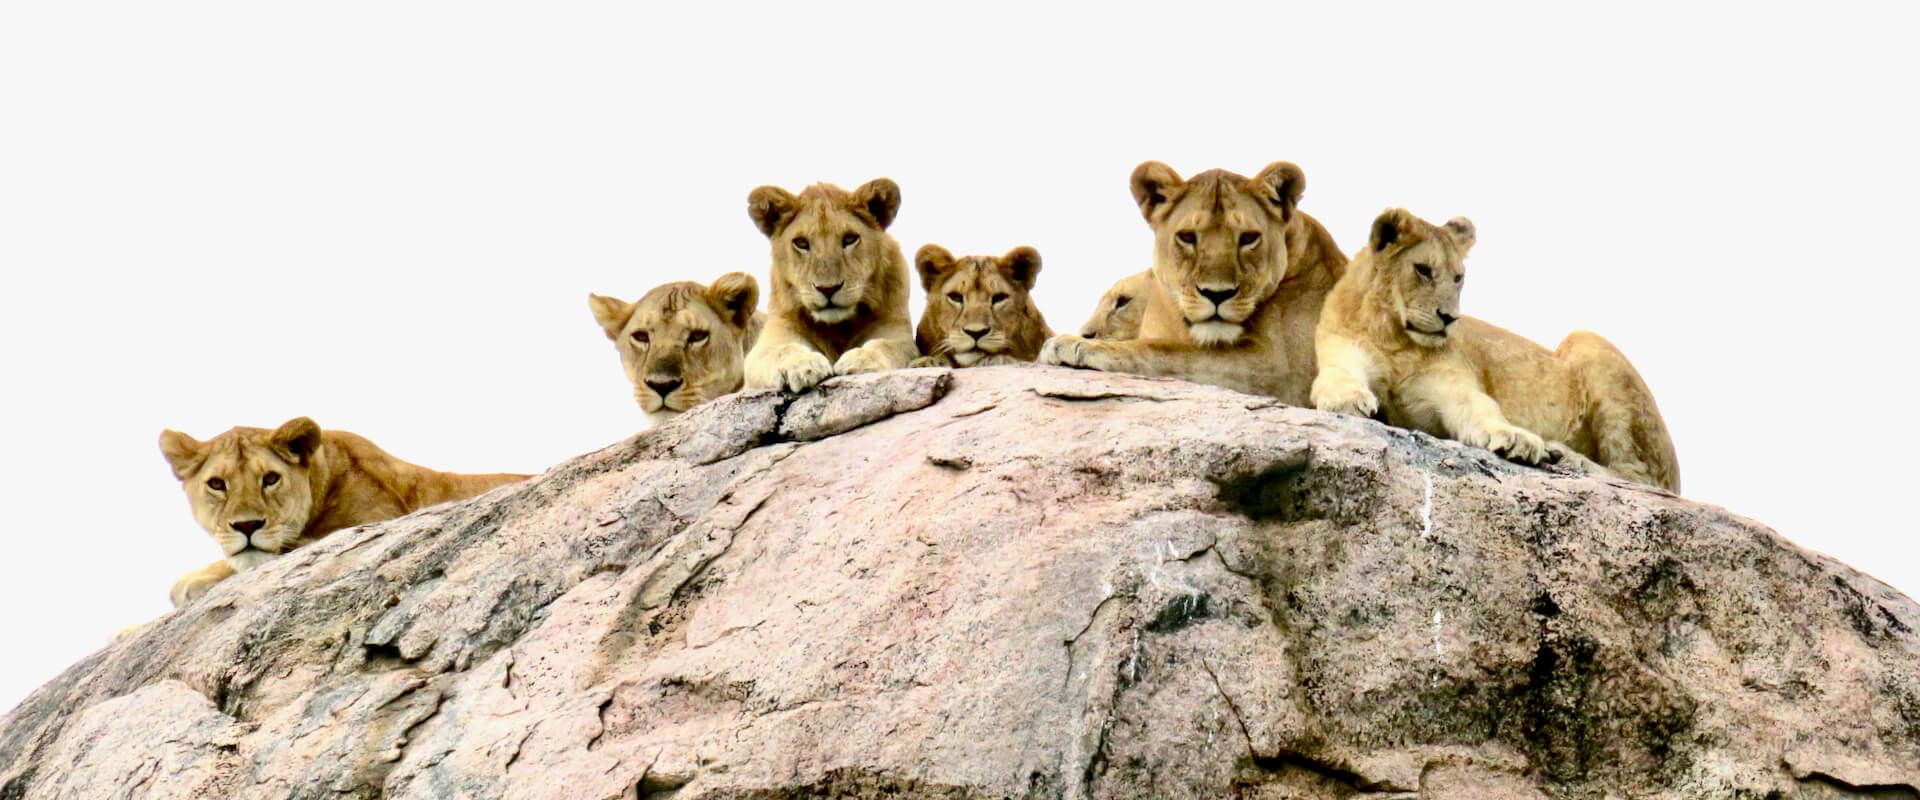 Lions on kopjes in the Serengeti